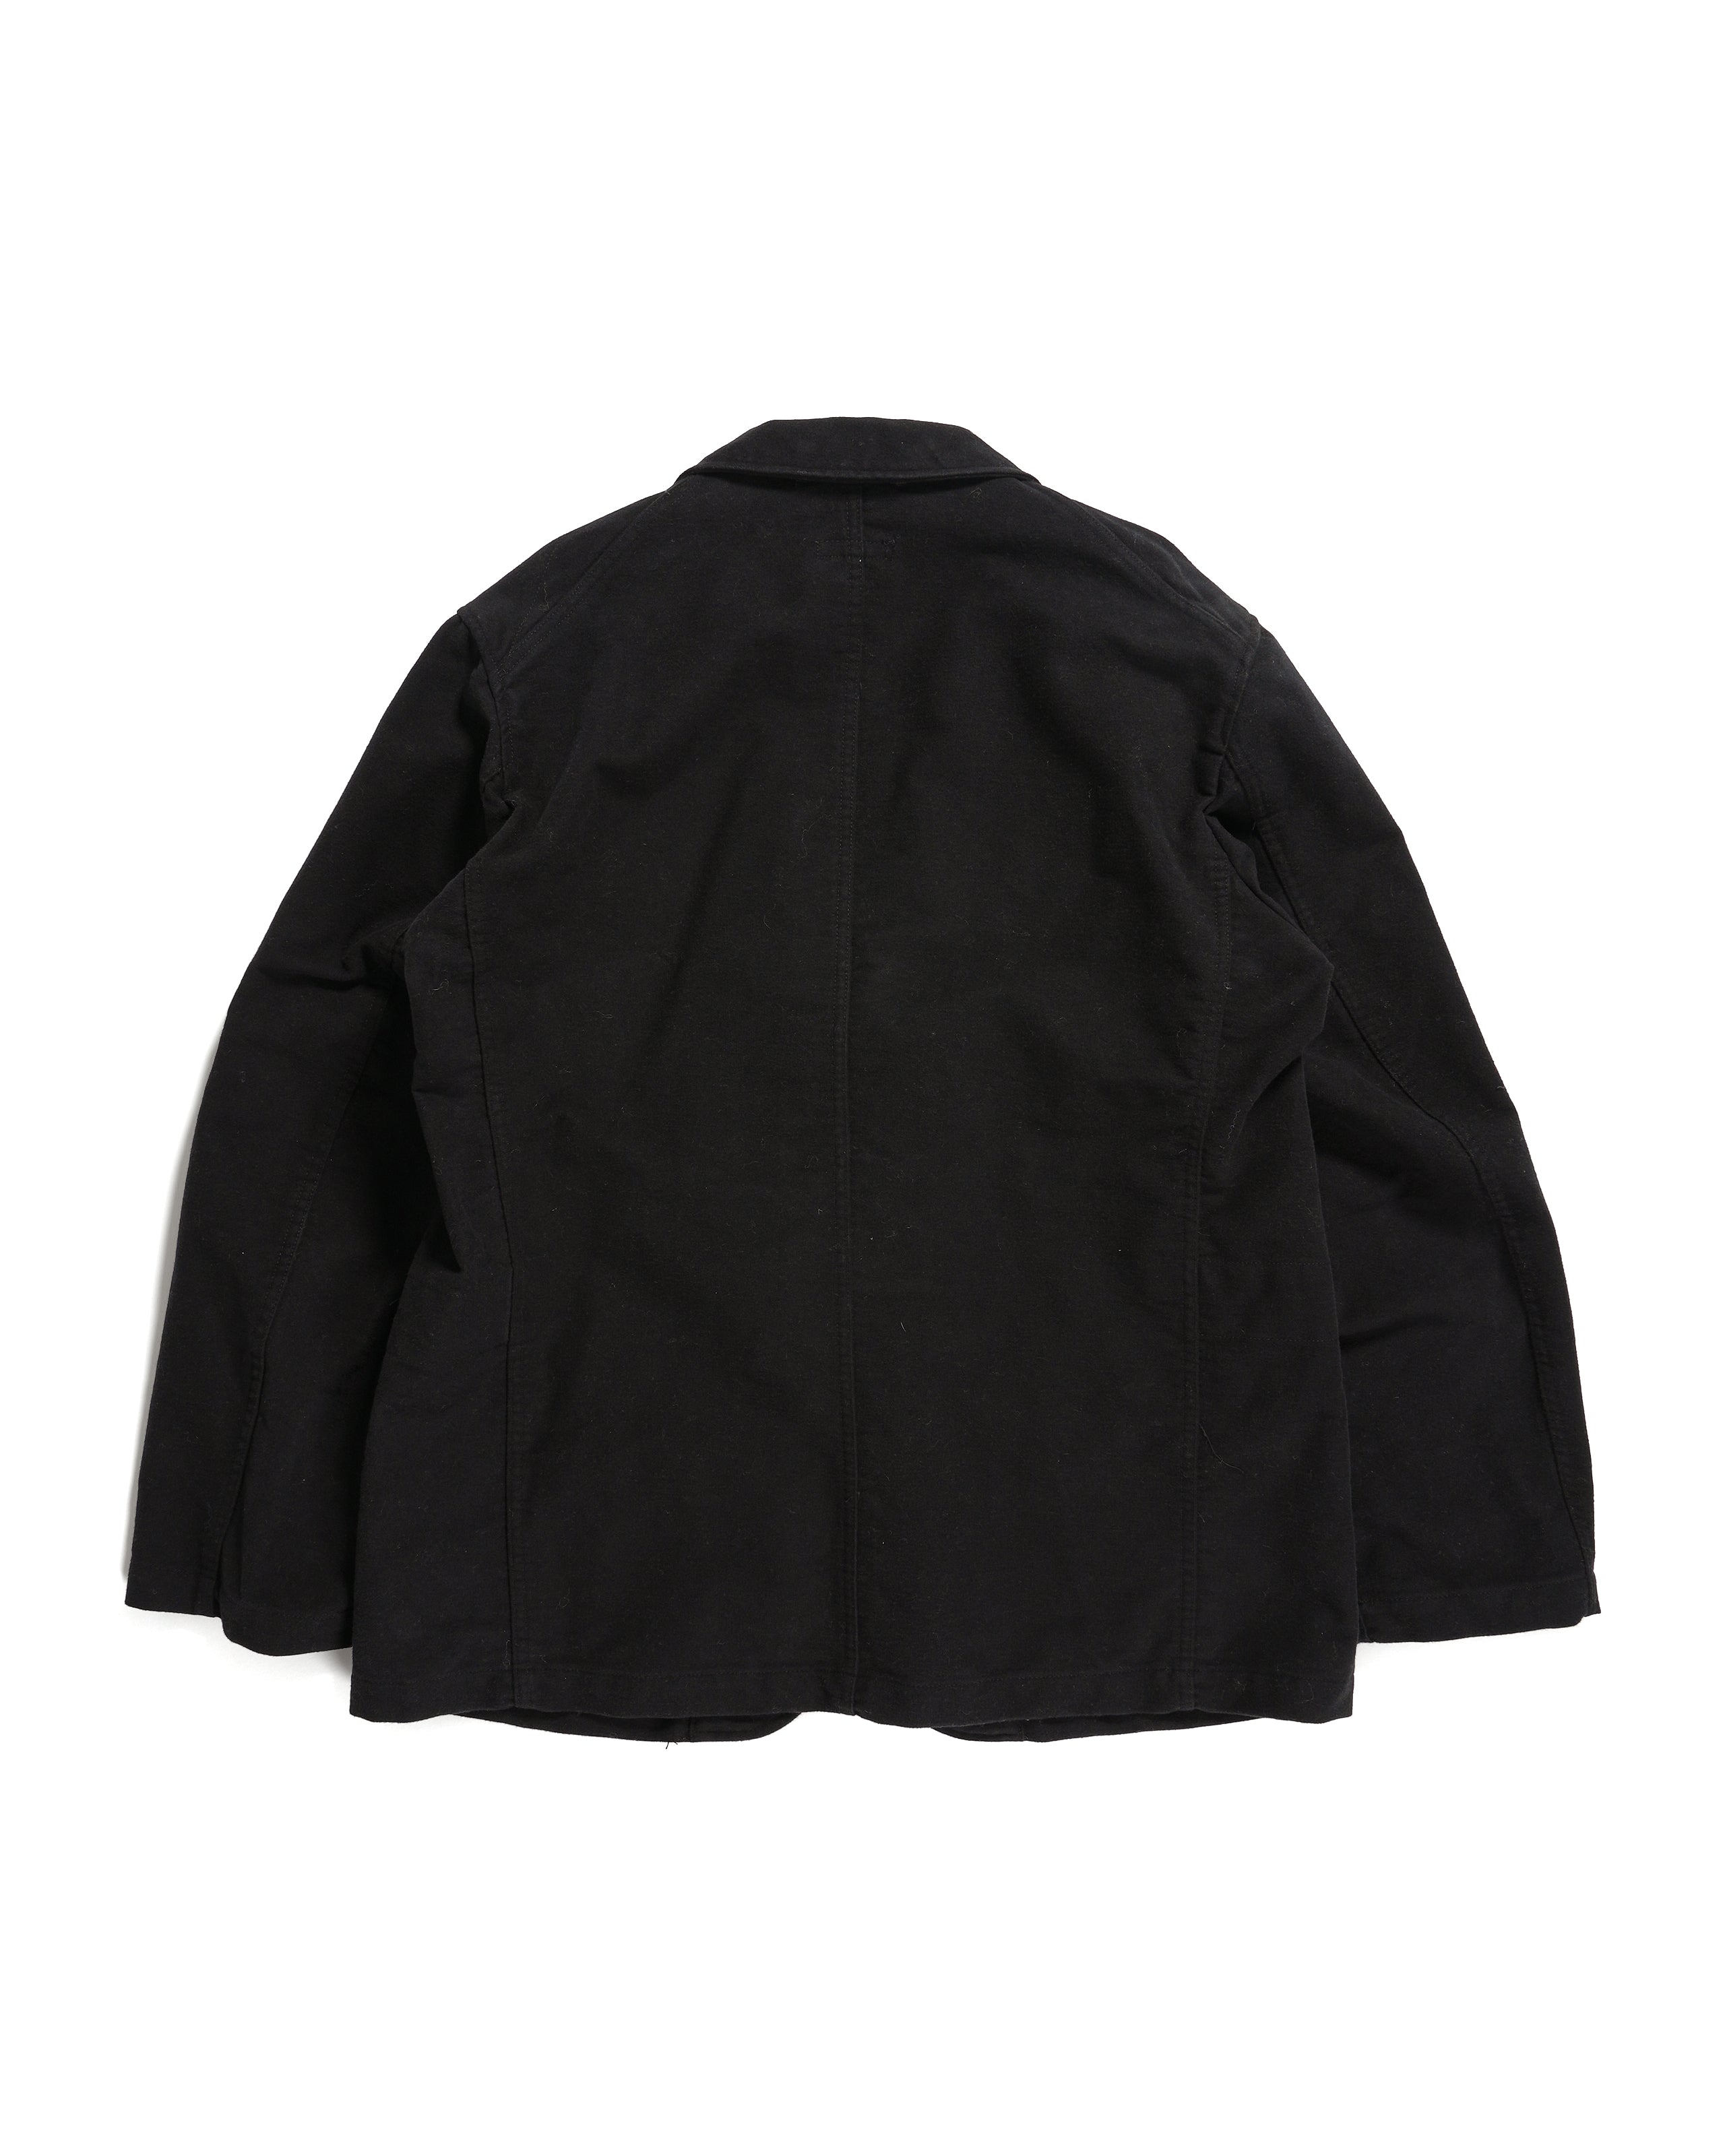 Bedford Jacket - Black Cotton Moleskin